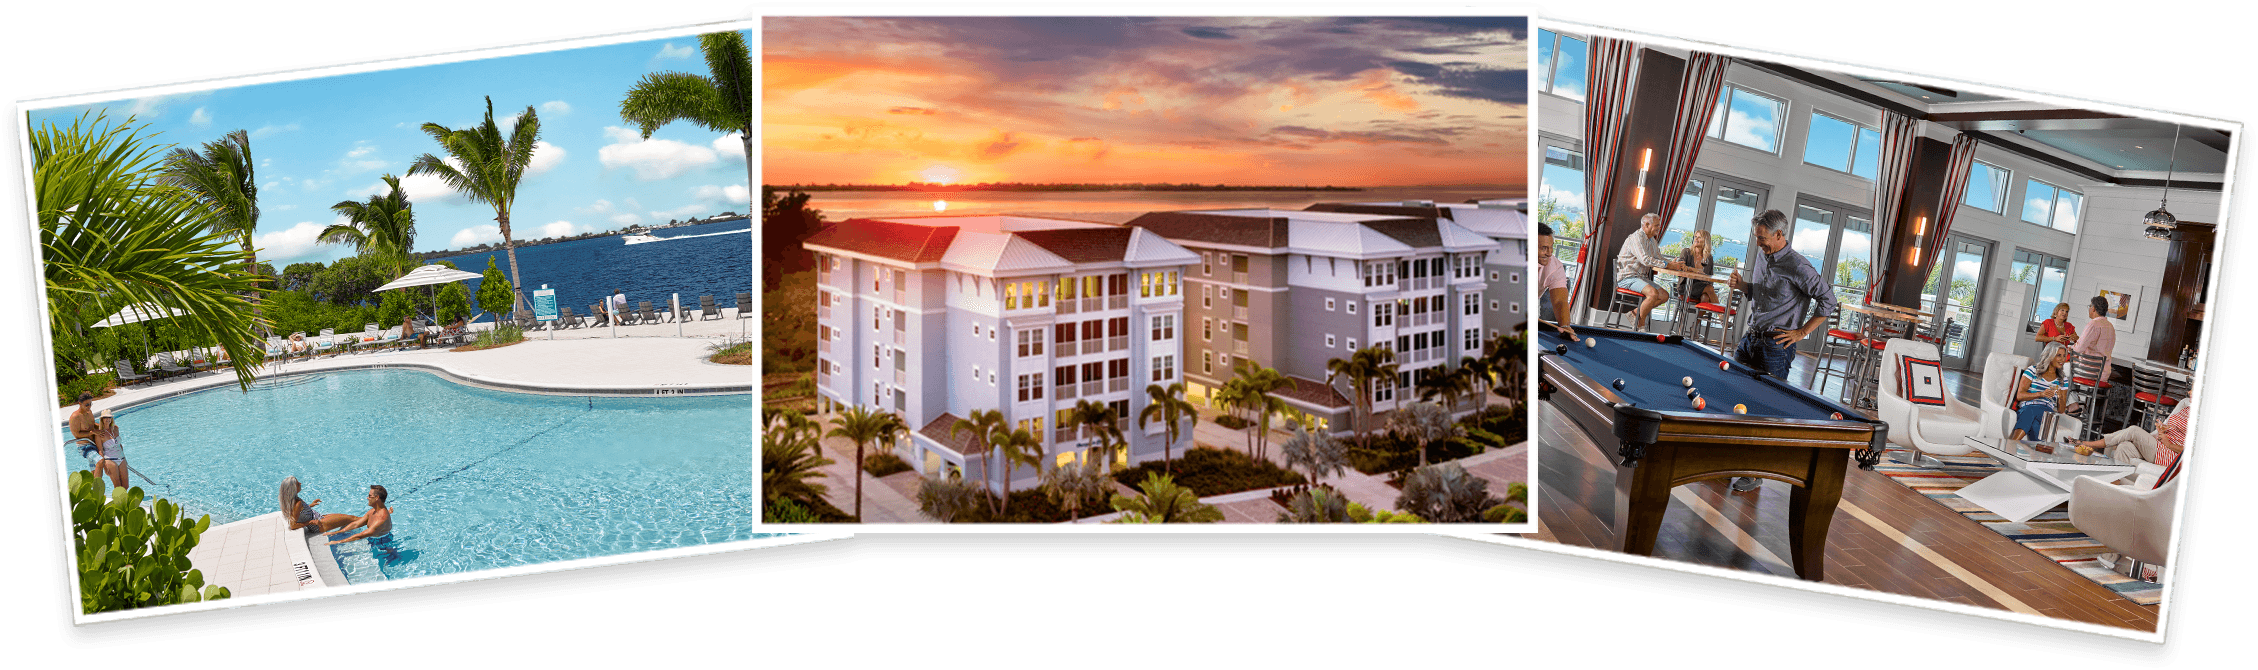 Rich Array Of Resort Amenities - Seaside Resort (2258x670)